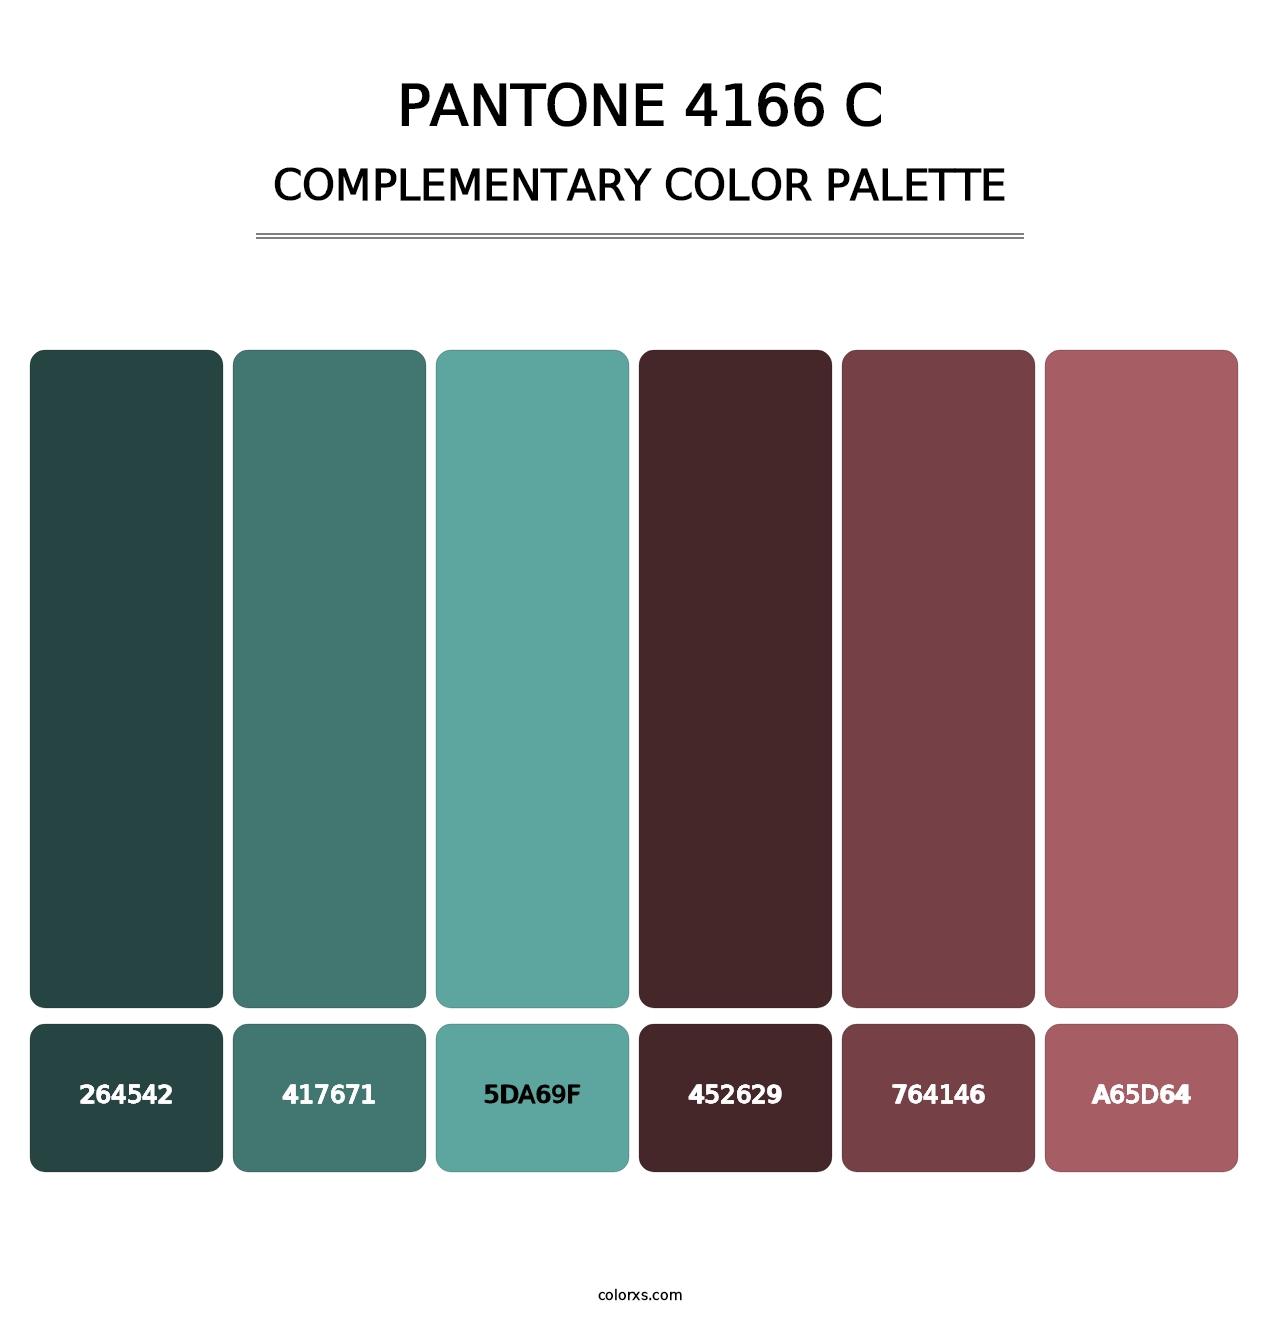 PANTONE 4166 C - Complementary Color Palette